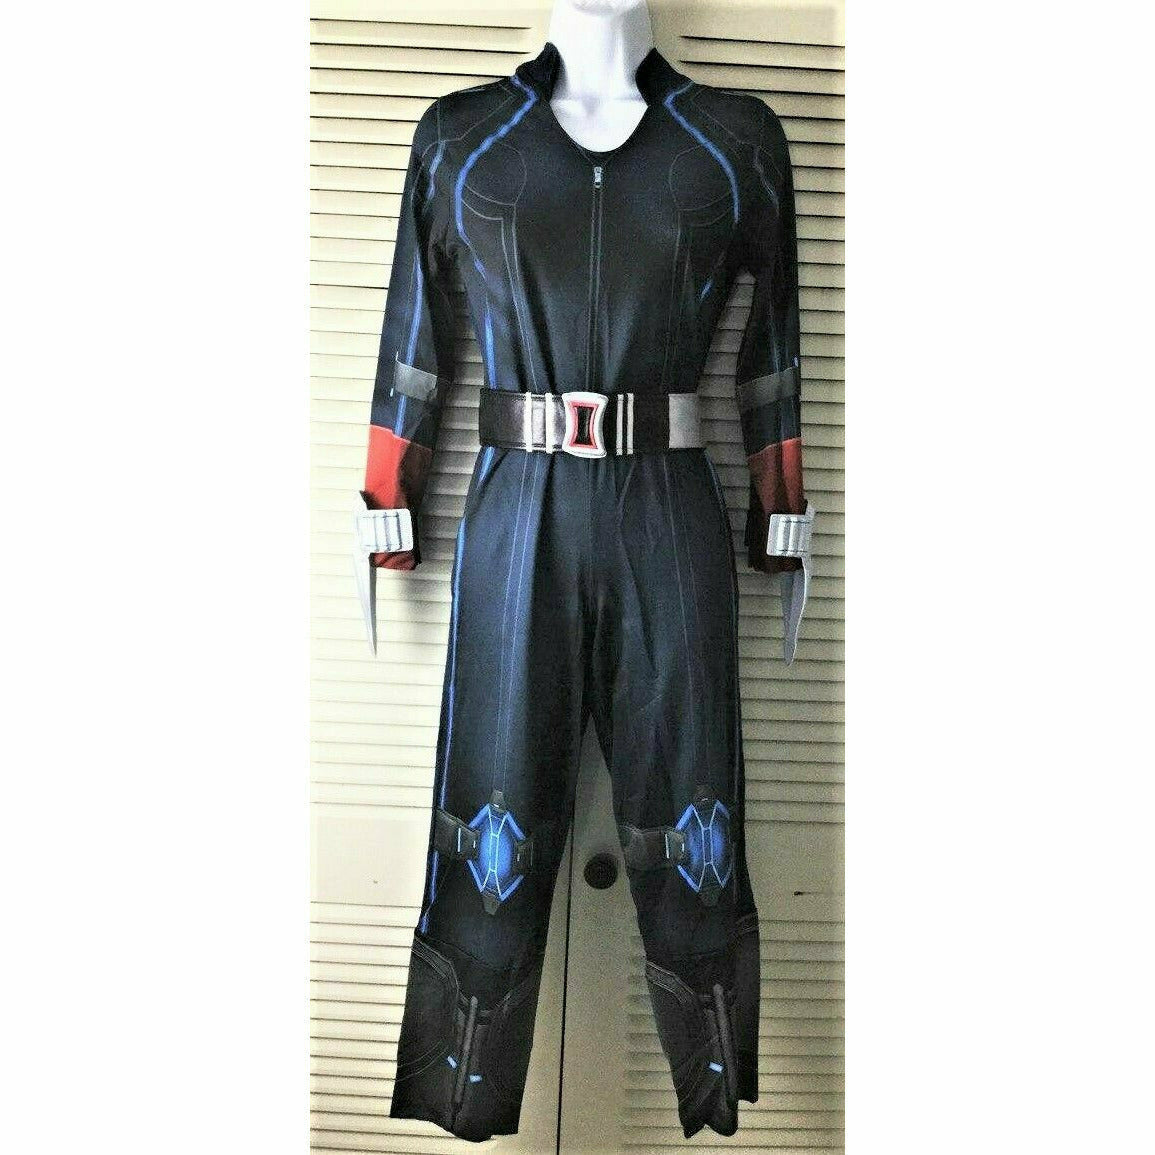 COSTUMES USA COSTUMES Girls Black Widow Age of Ultron Costume